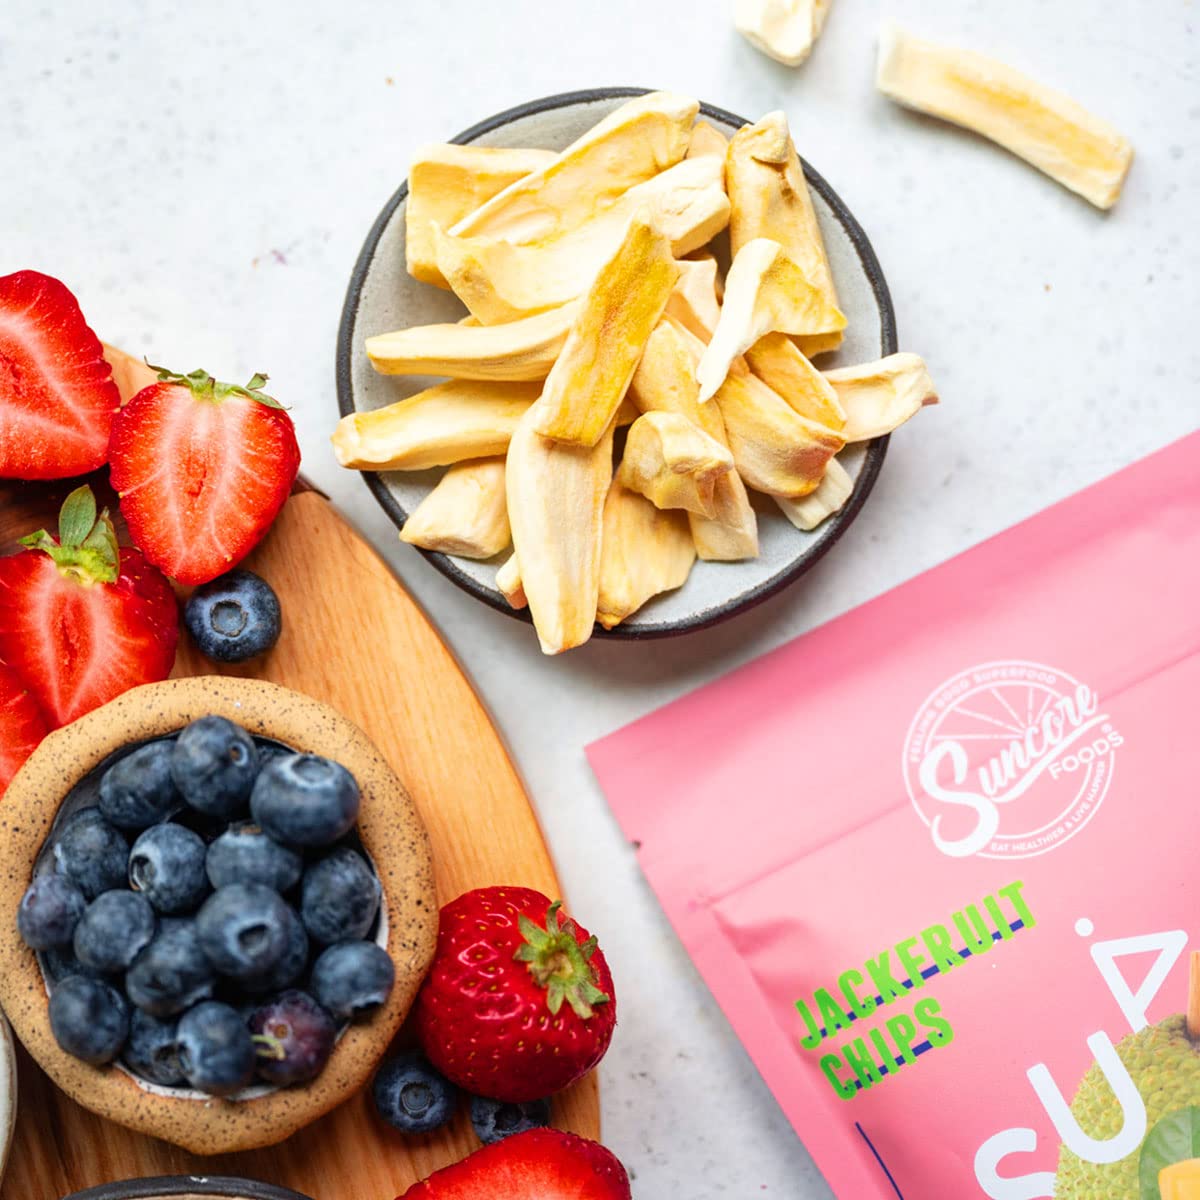 Suncore Foods Jackfruit Chips & Snacks, Gluten-Free, Non-GMO, 5.32oz (1 Pack)